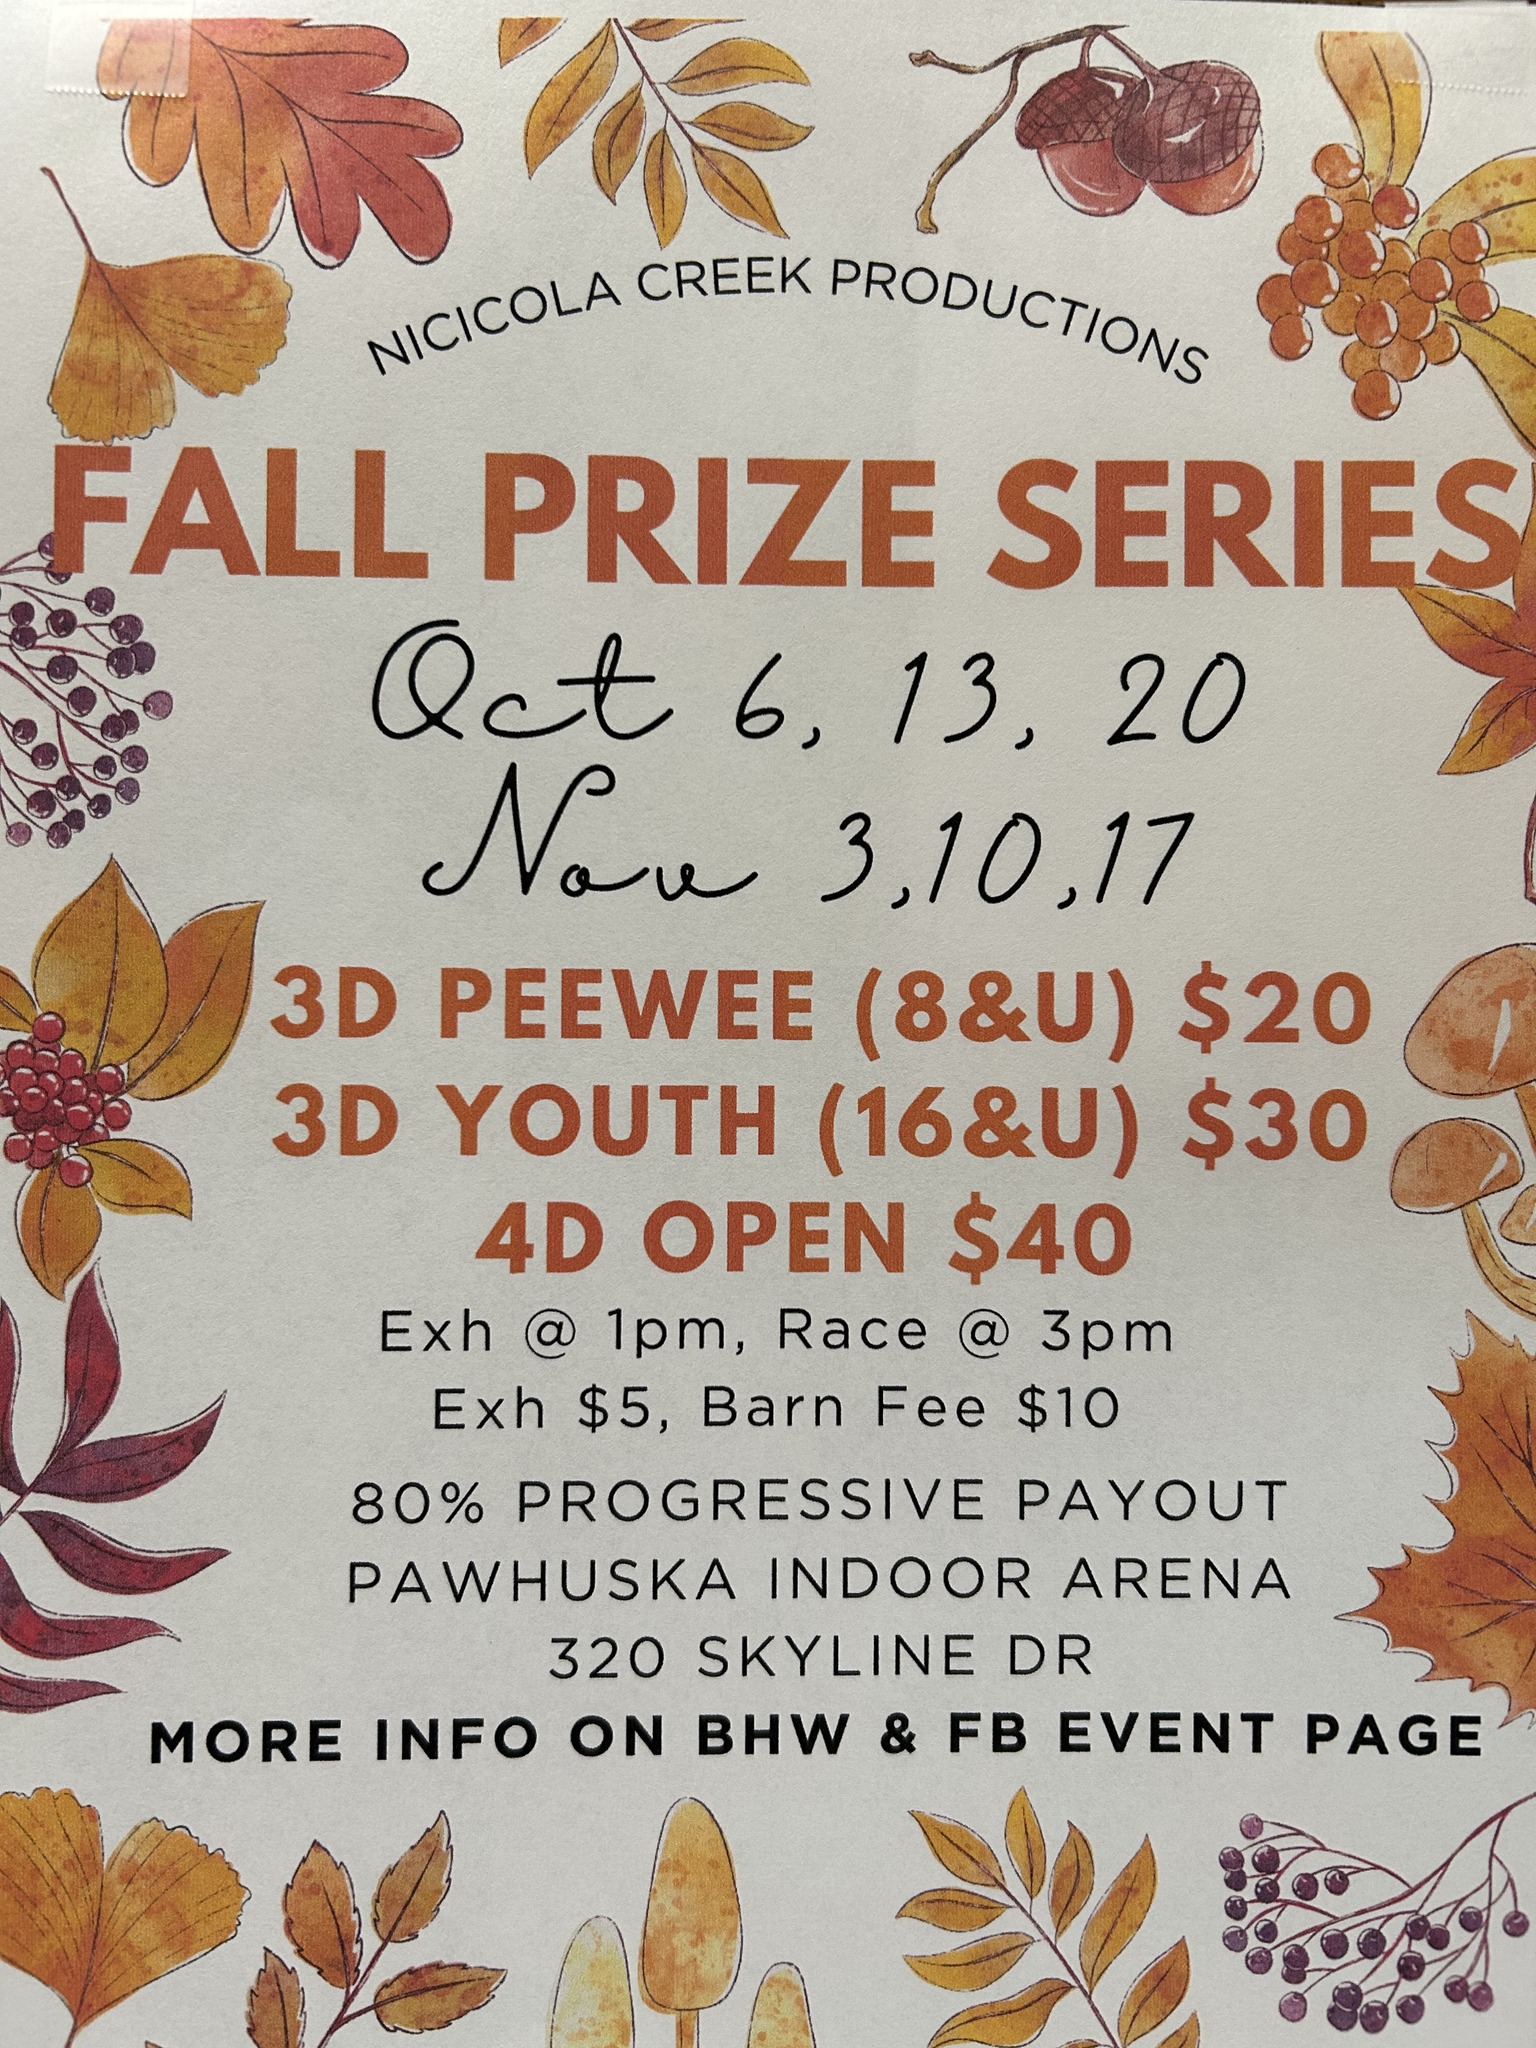 Fall Prize Series